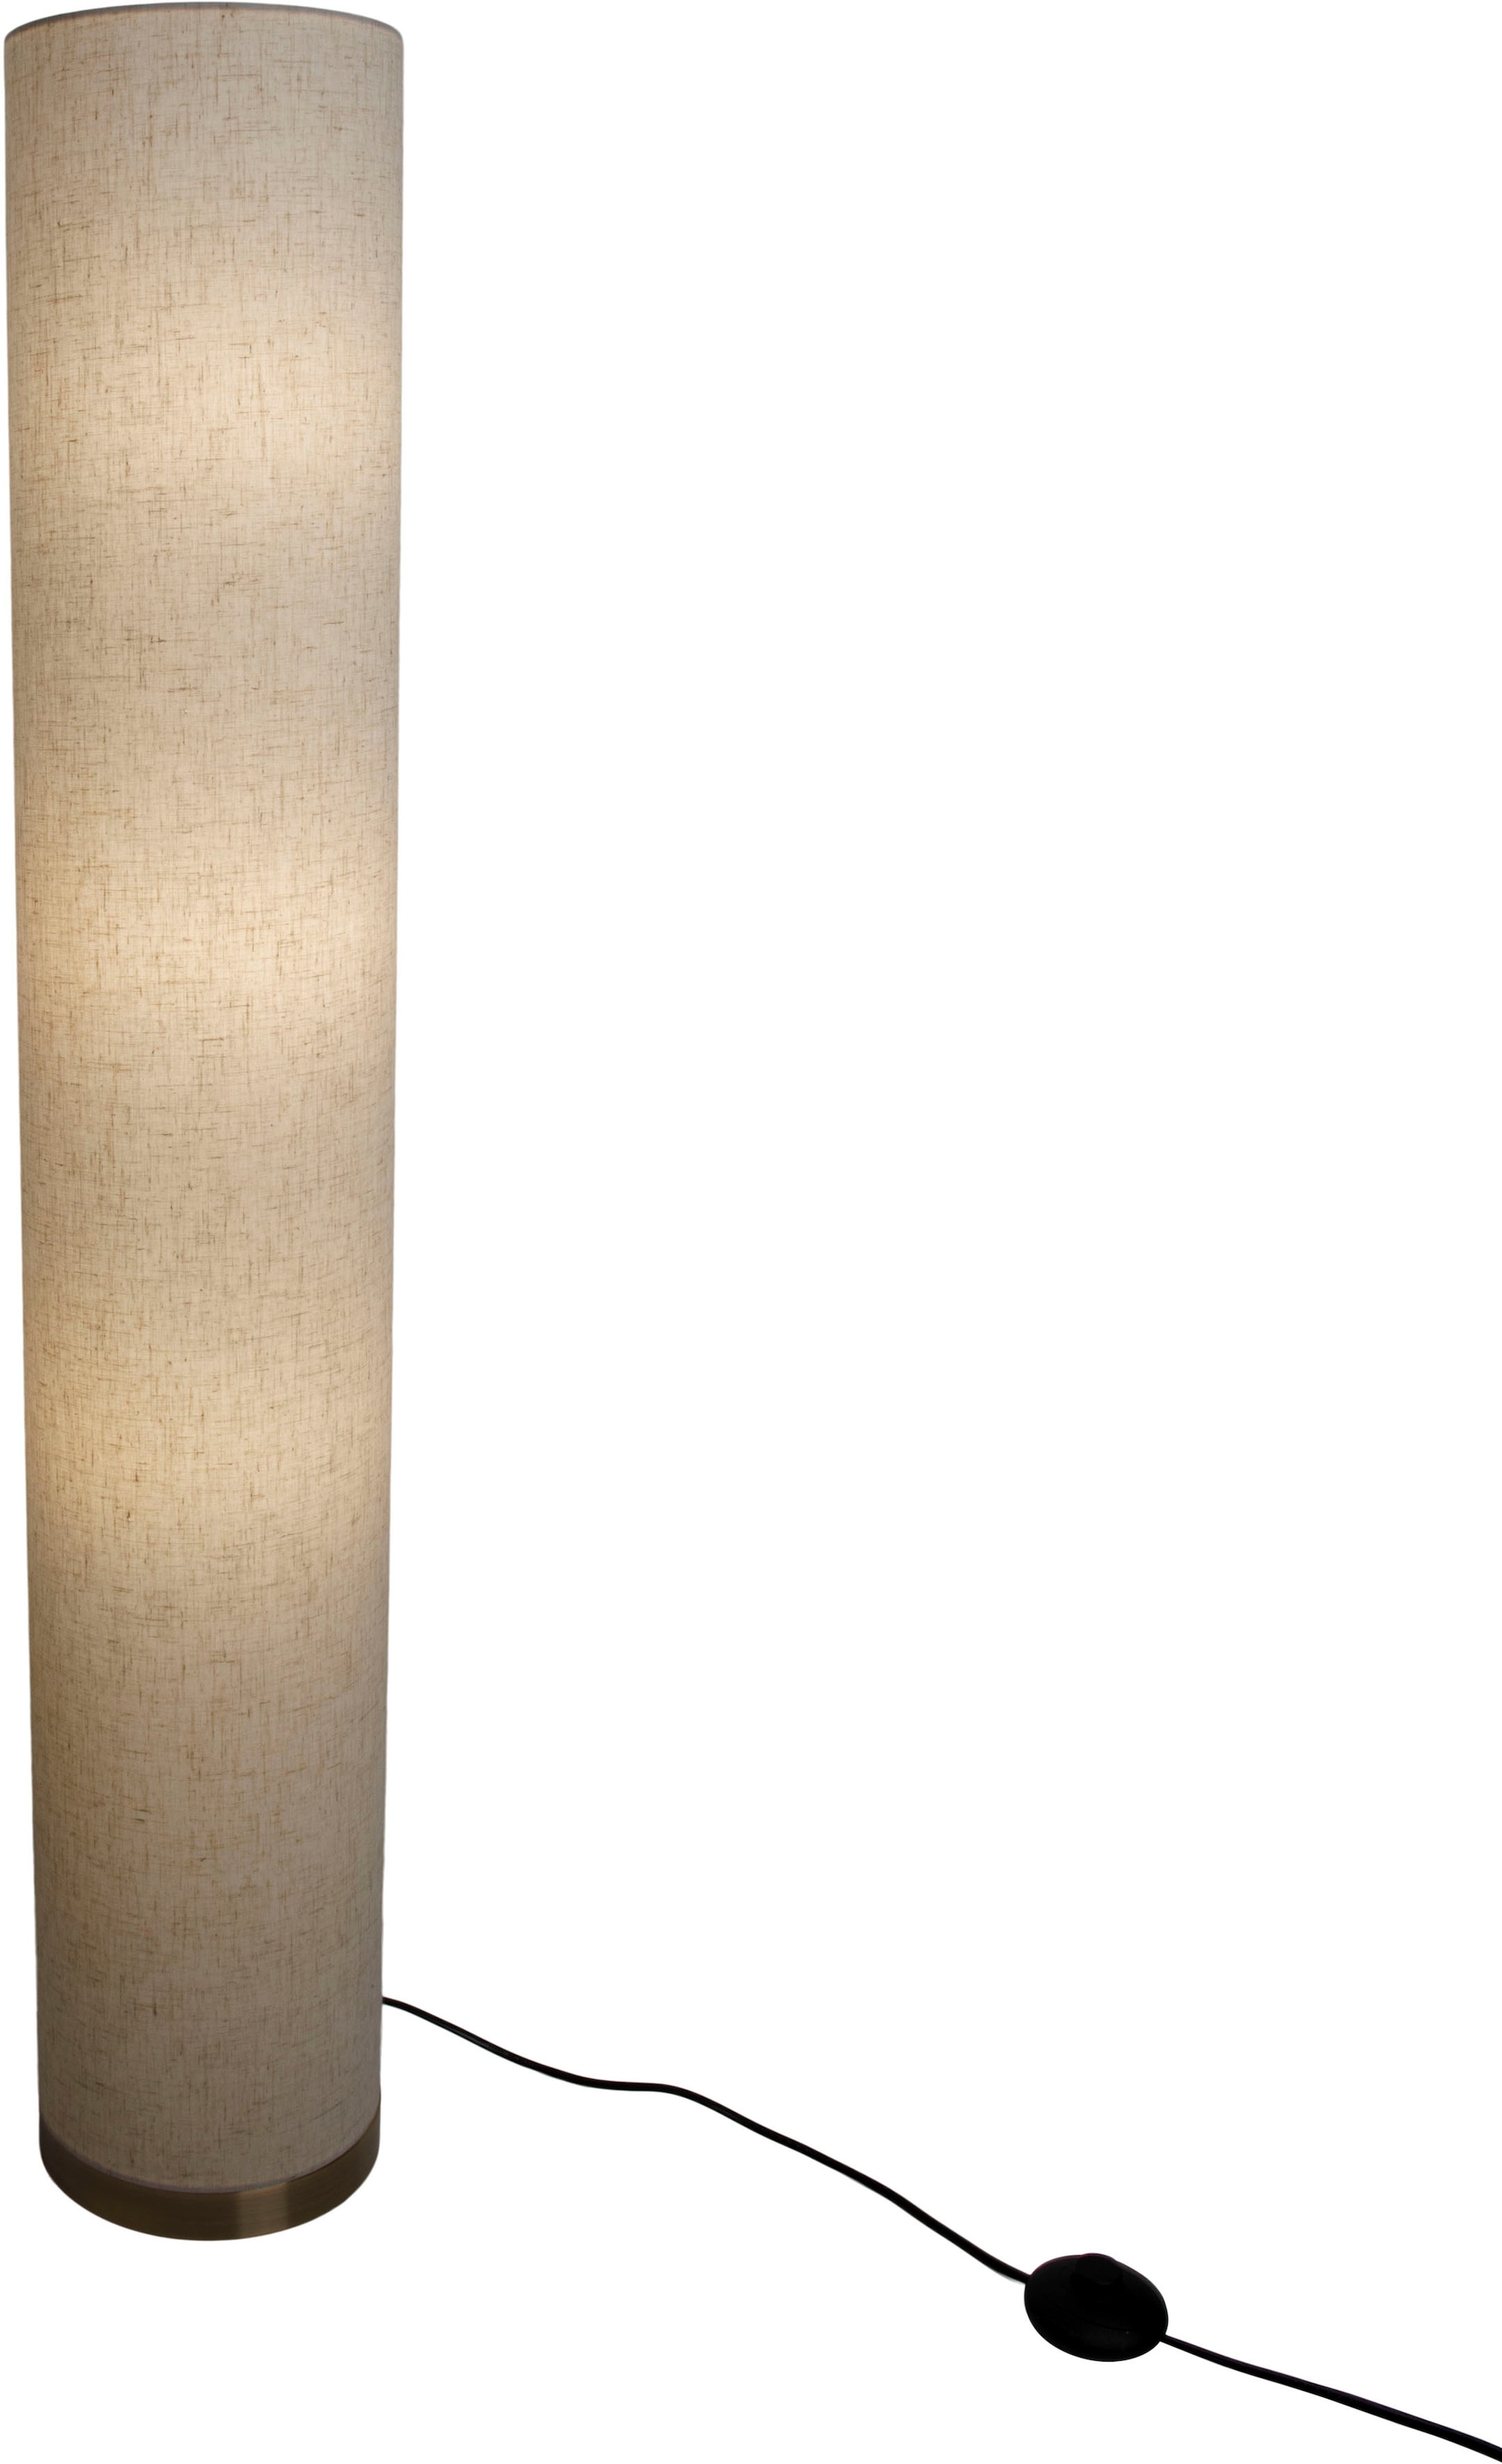 näve Stehlampe »Beate«, 3 flammig-flammig, Metall/Textil, exkl. 3x E27 max. 40W, Höhe: 110cm, Farbe: natur